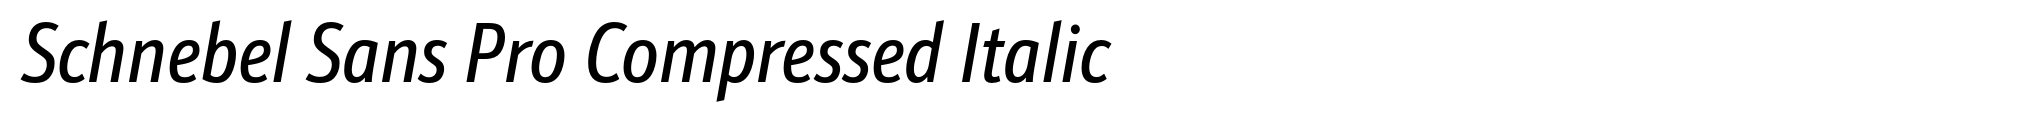 Schnebel Sans Pro Compressed Italic image